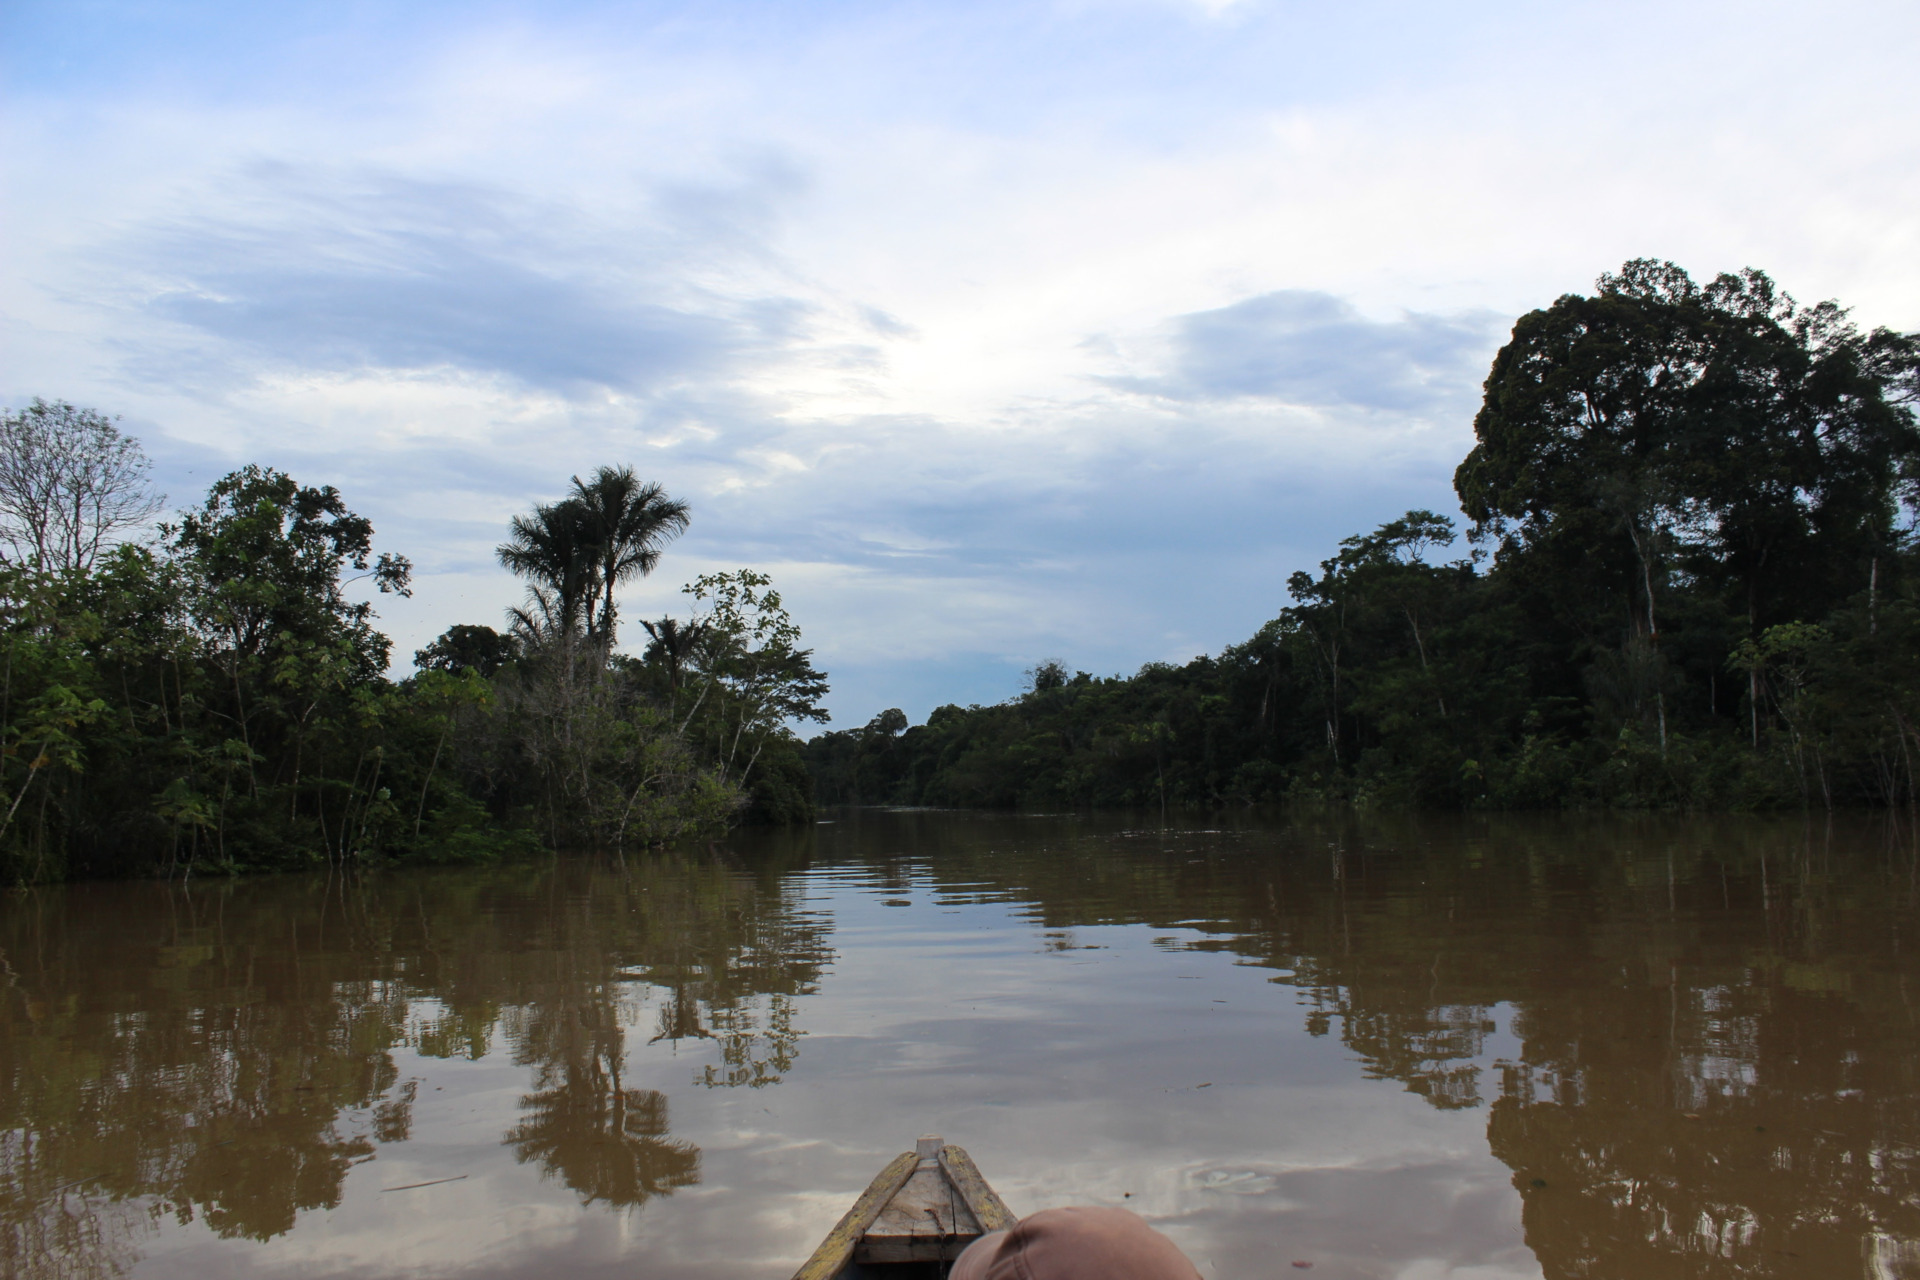 Loretoyacu River, Colombia, March 2019